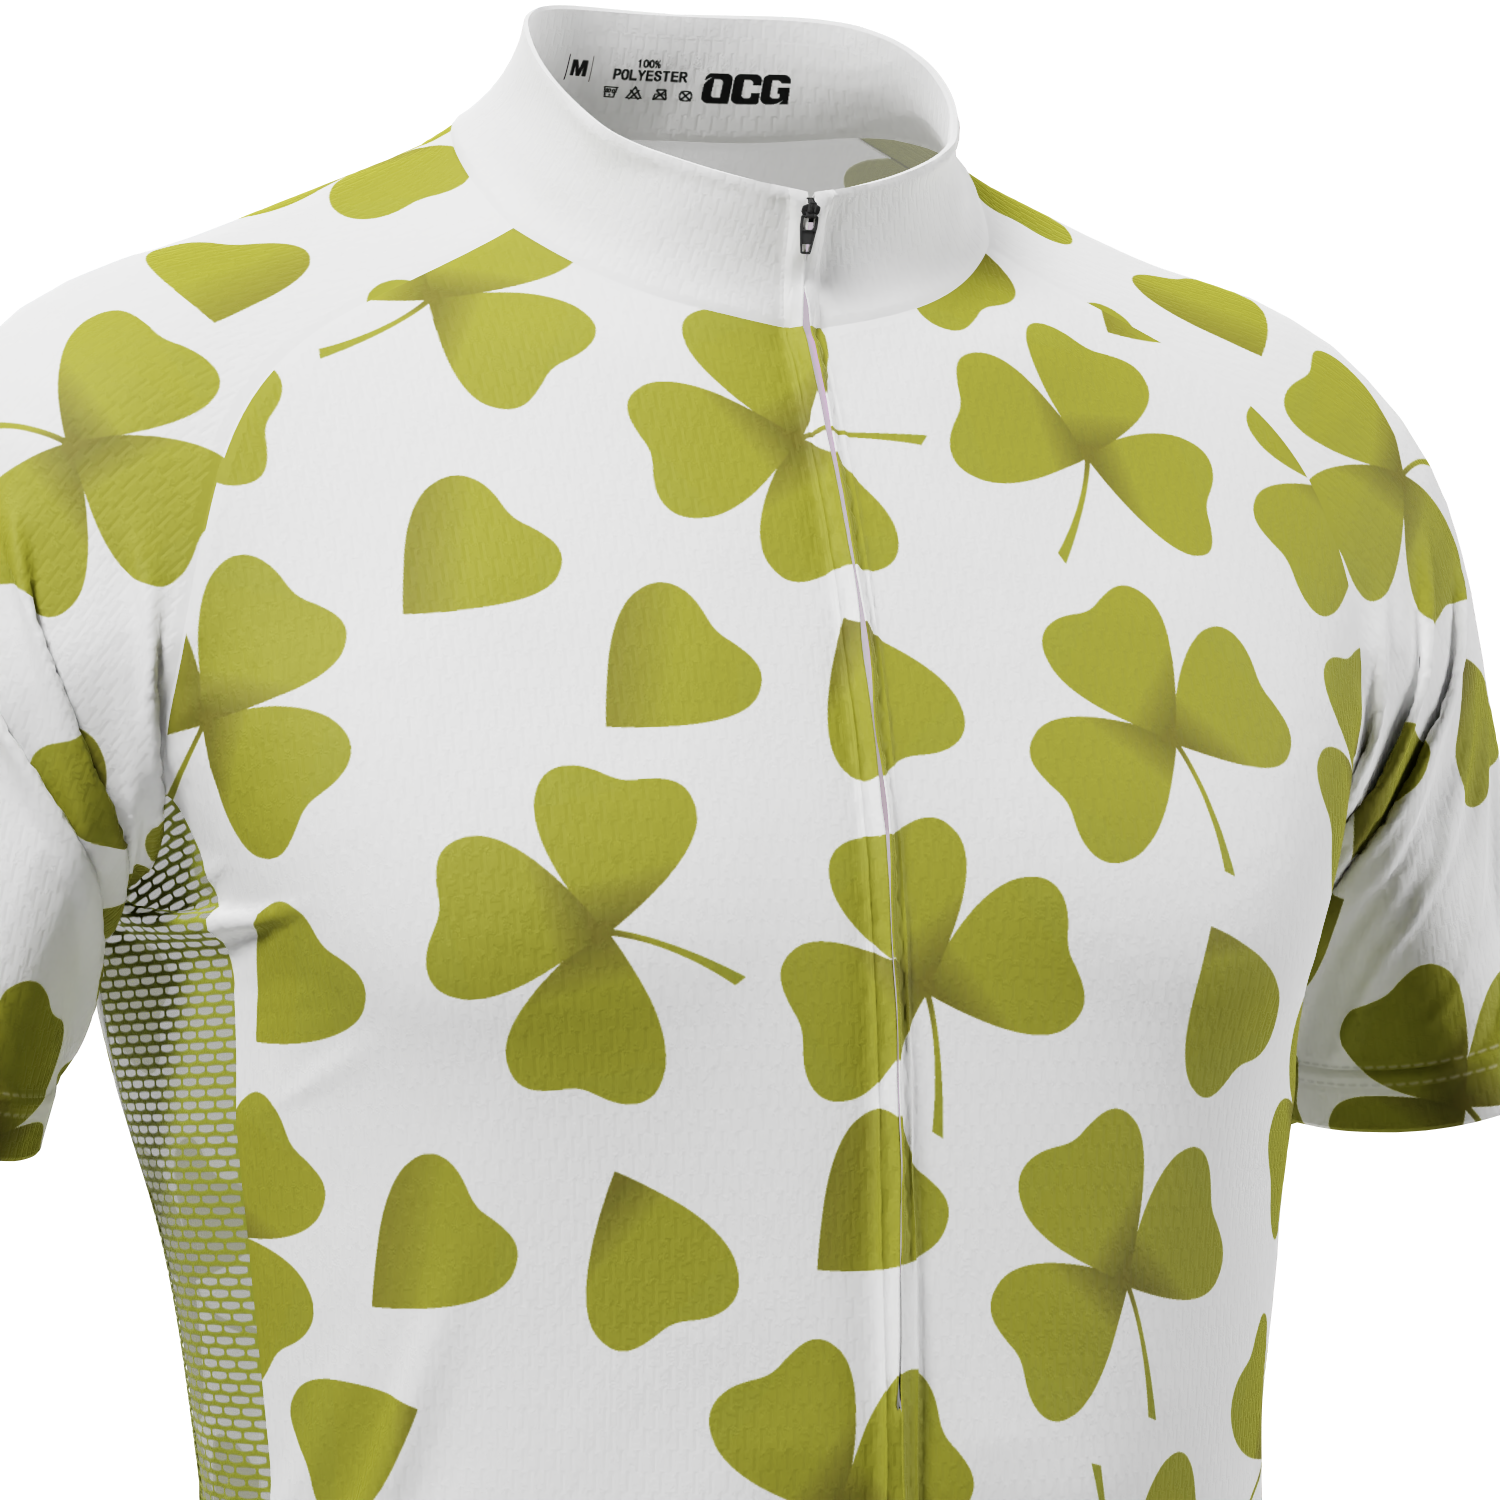 Men's Three Leaf Clover Ireland Short Sleeve Cycling Jersey